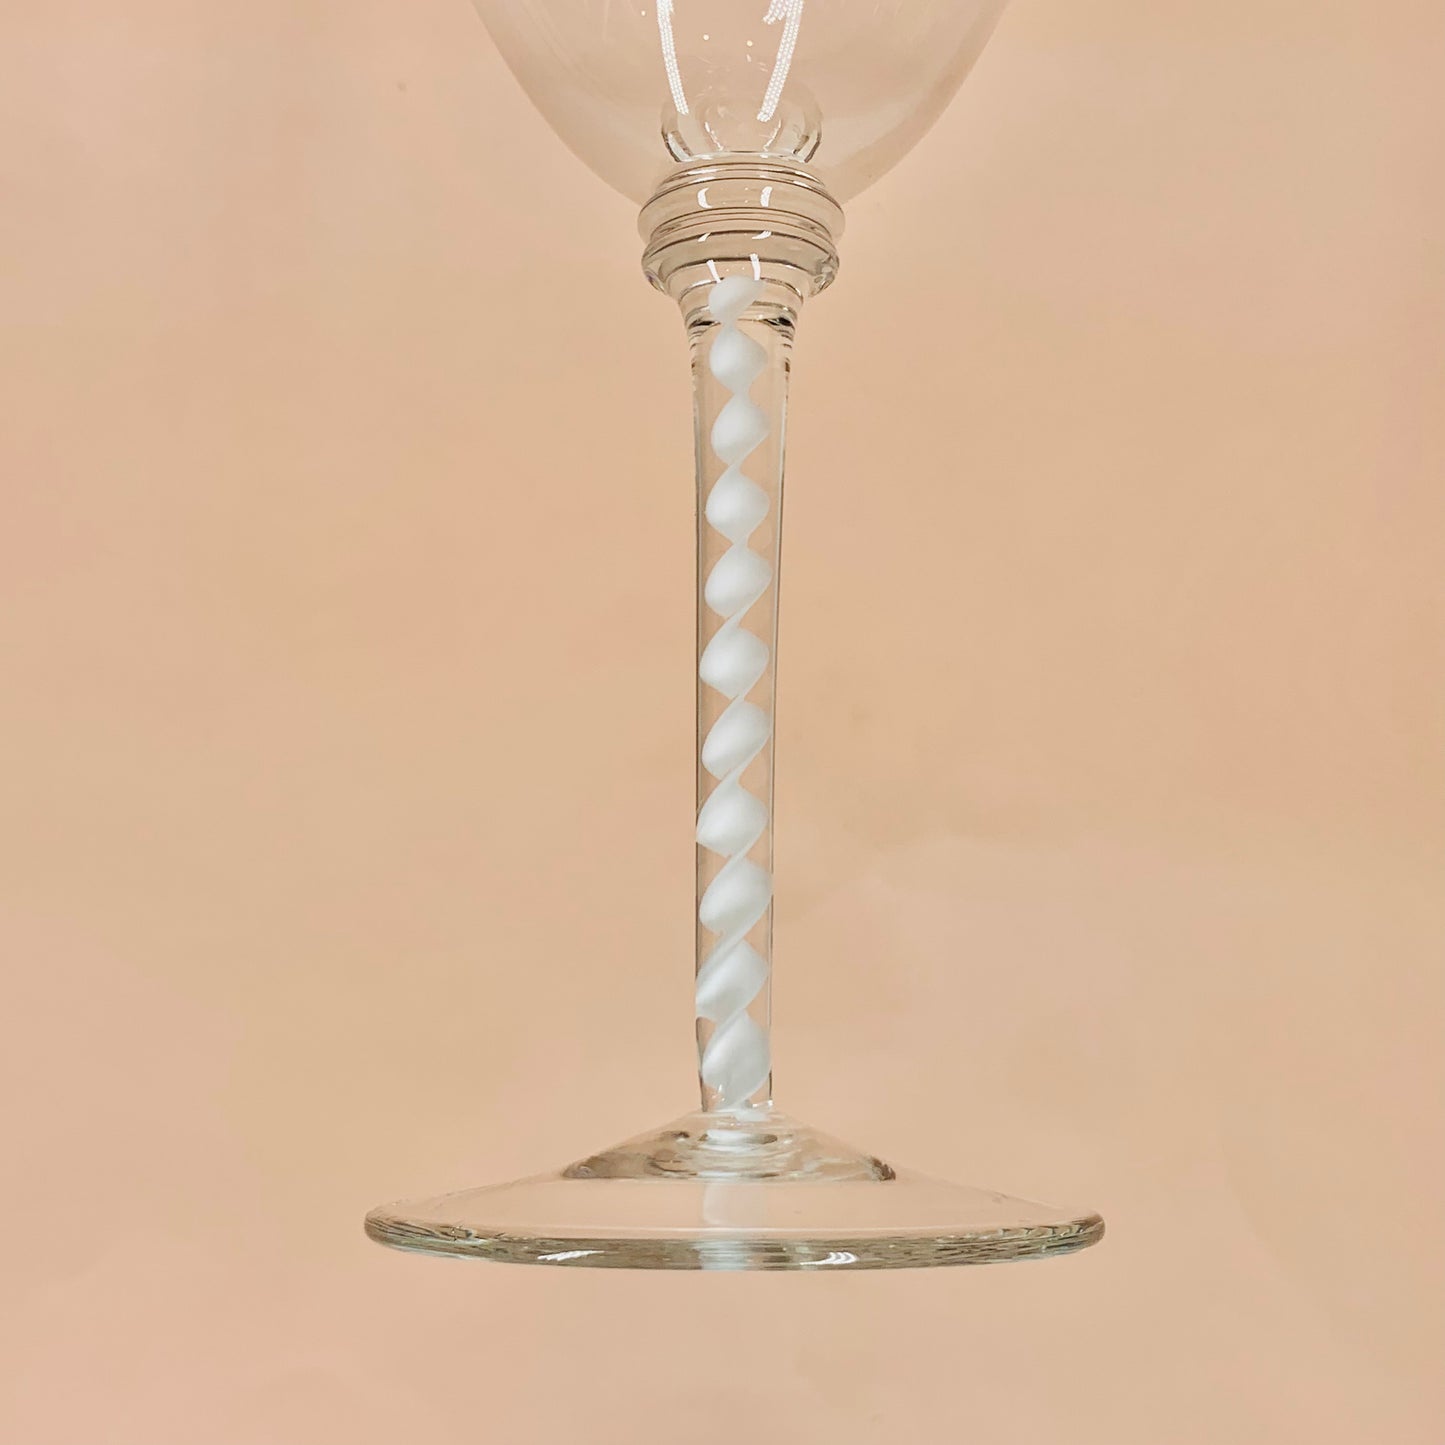 Rare hand made vintage white ribbon twist stem wine glasses